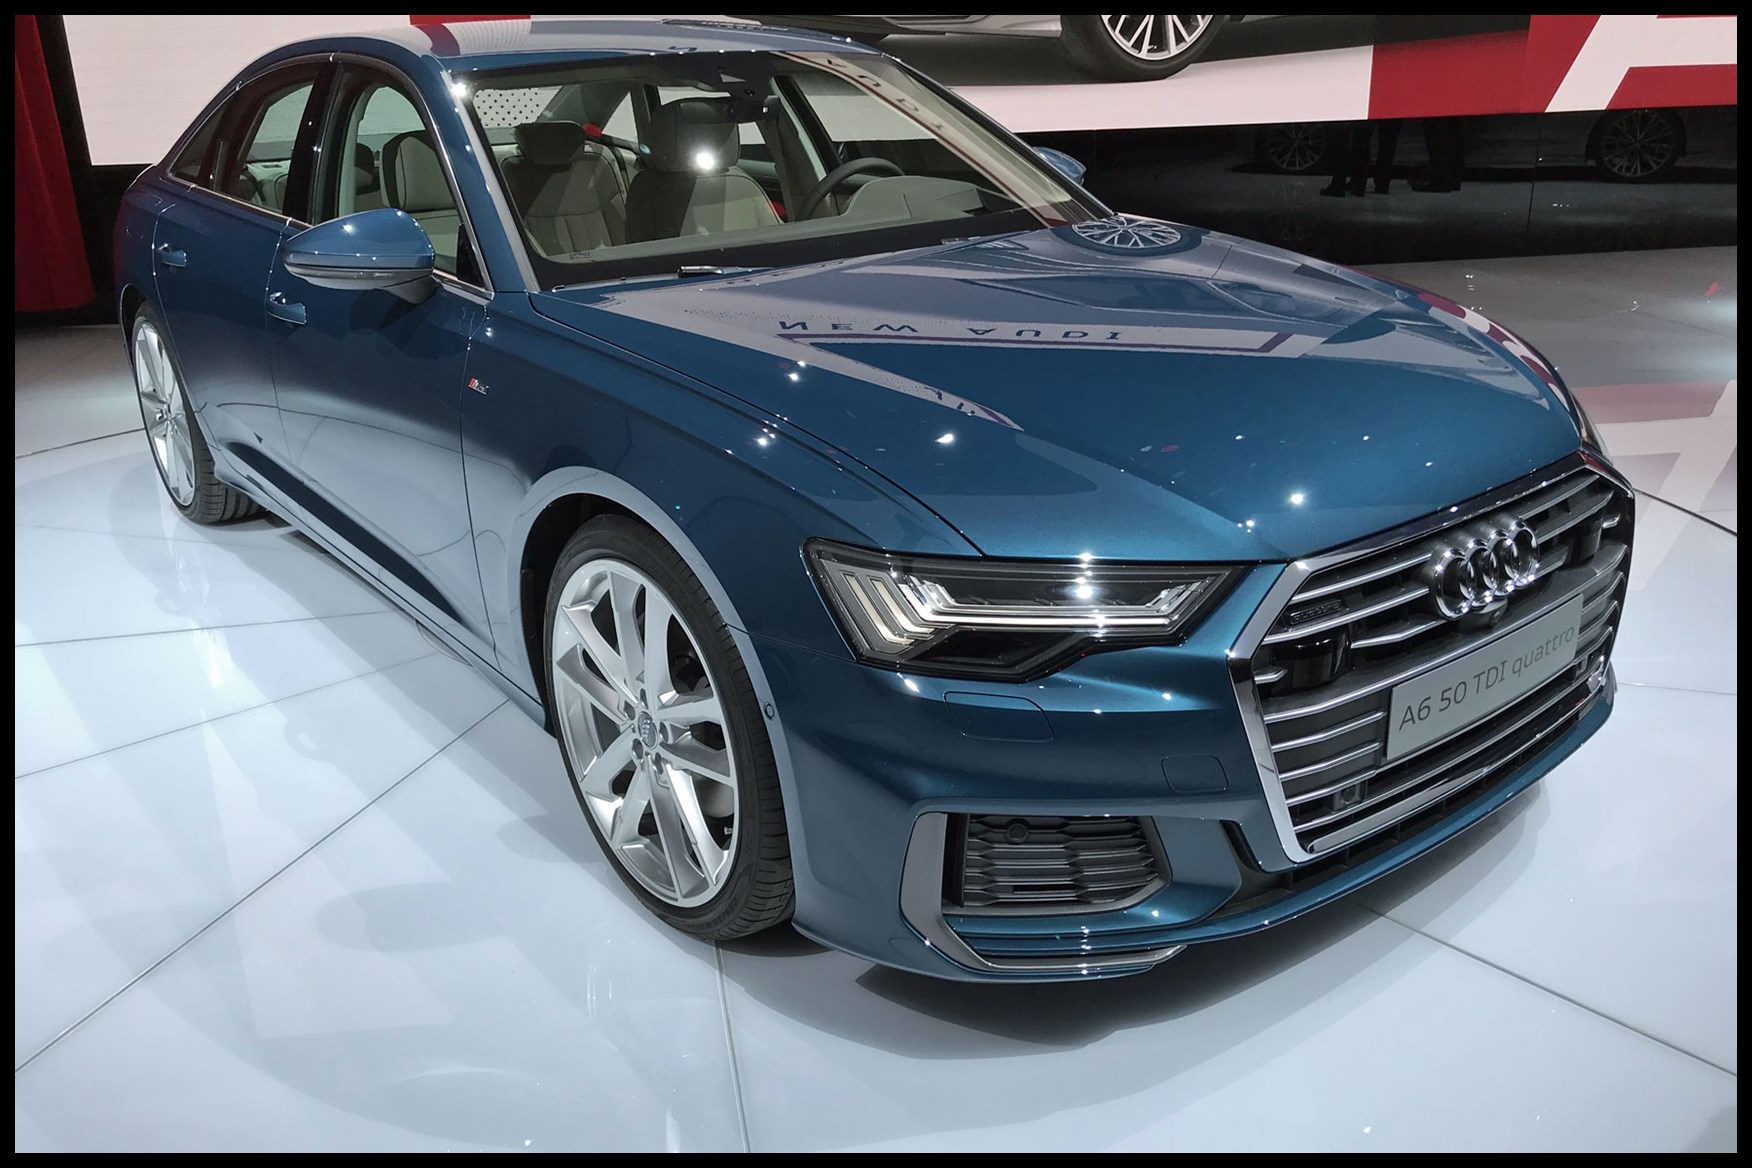 New Audi A6 at the 2018 Geneva motor show